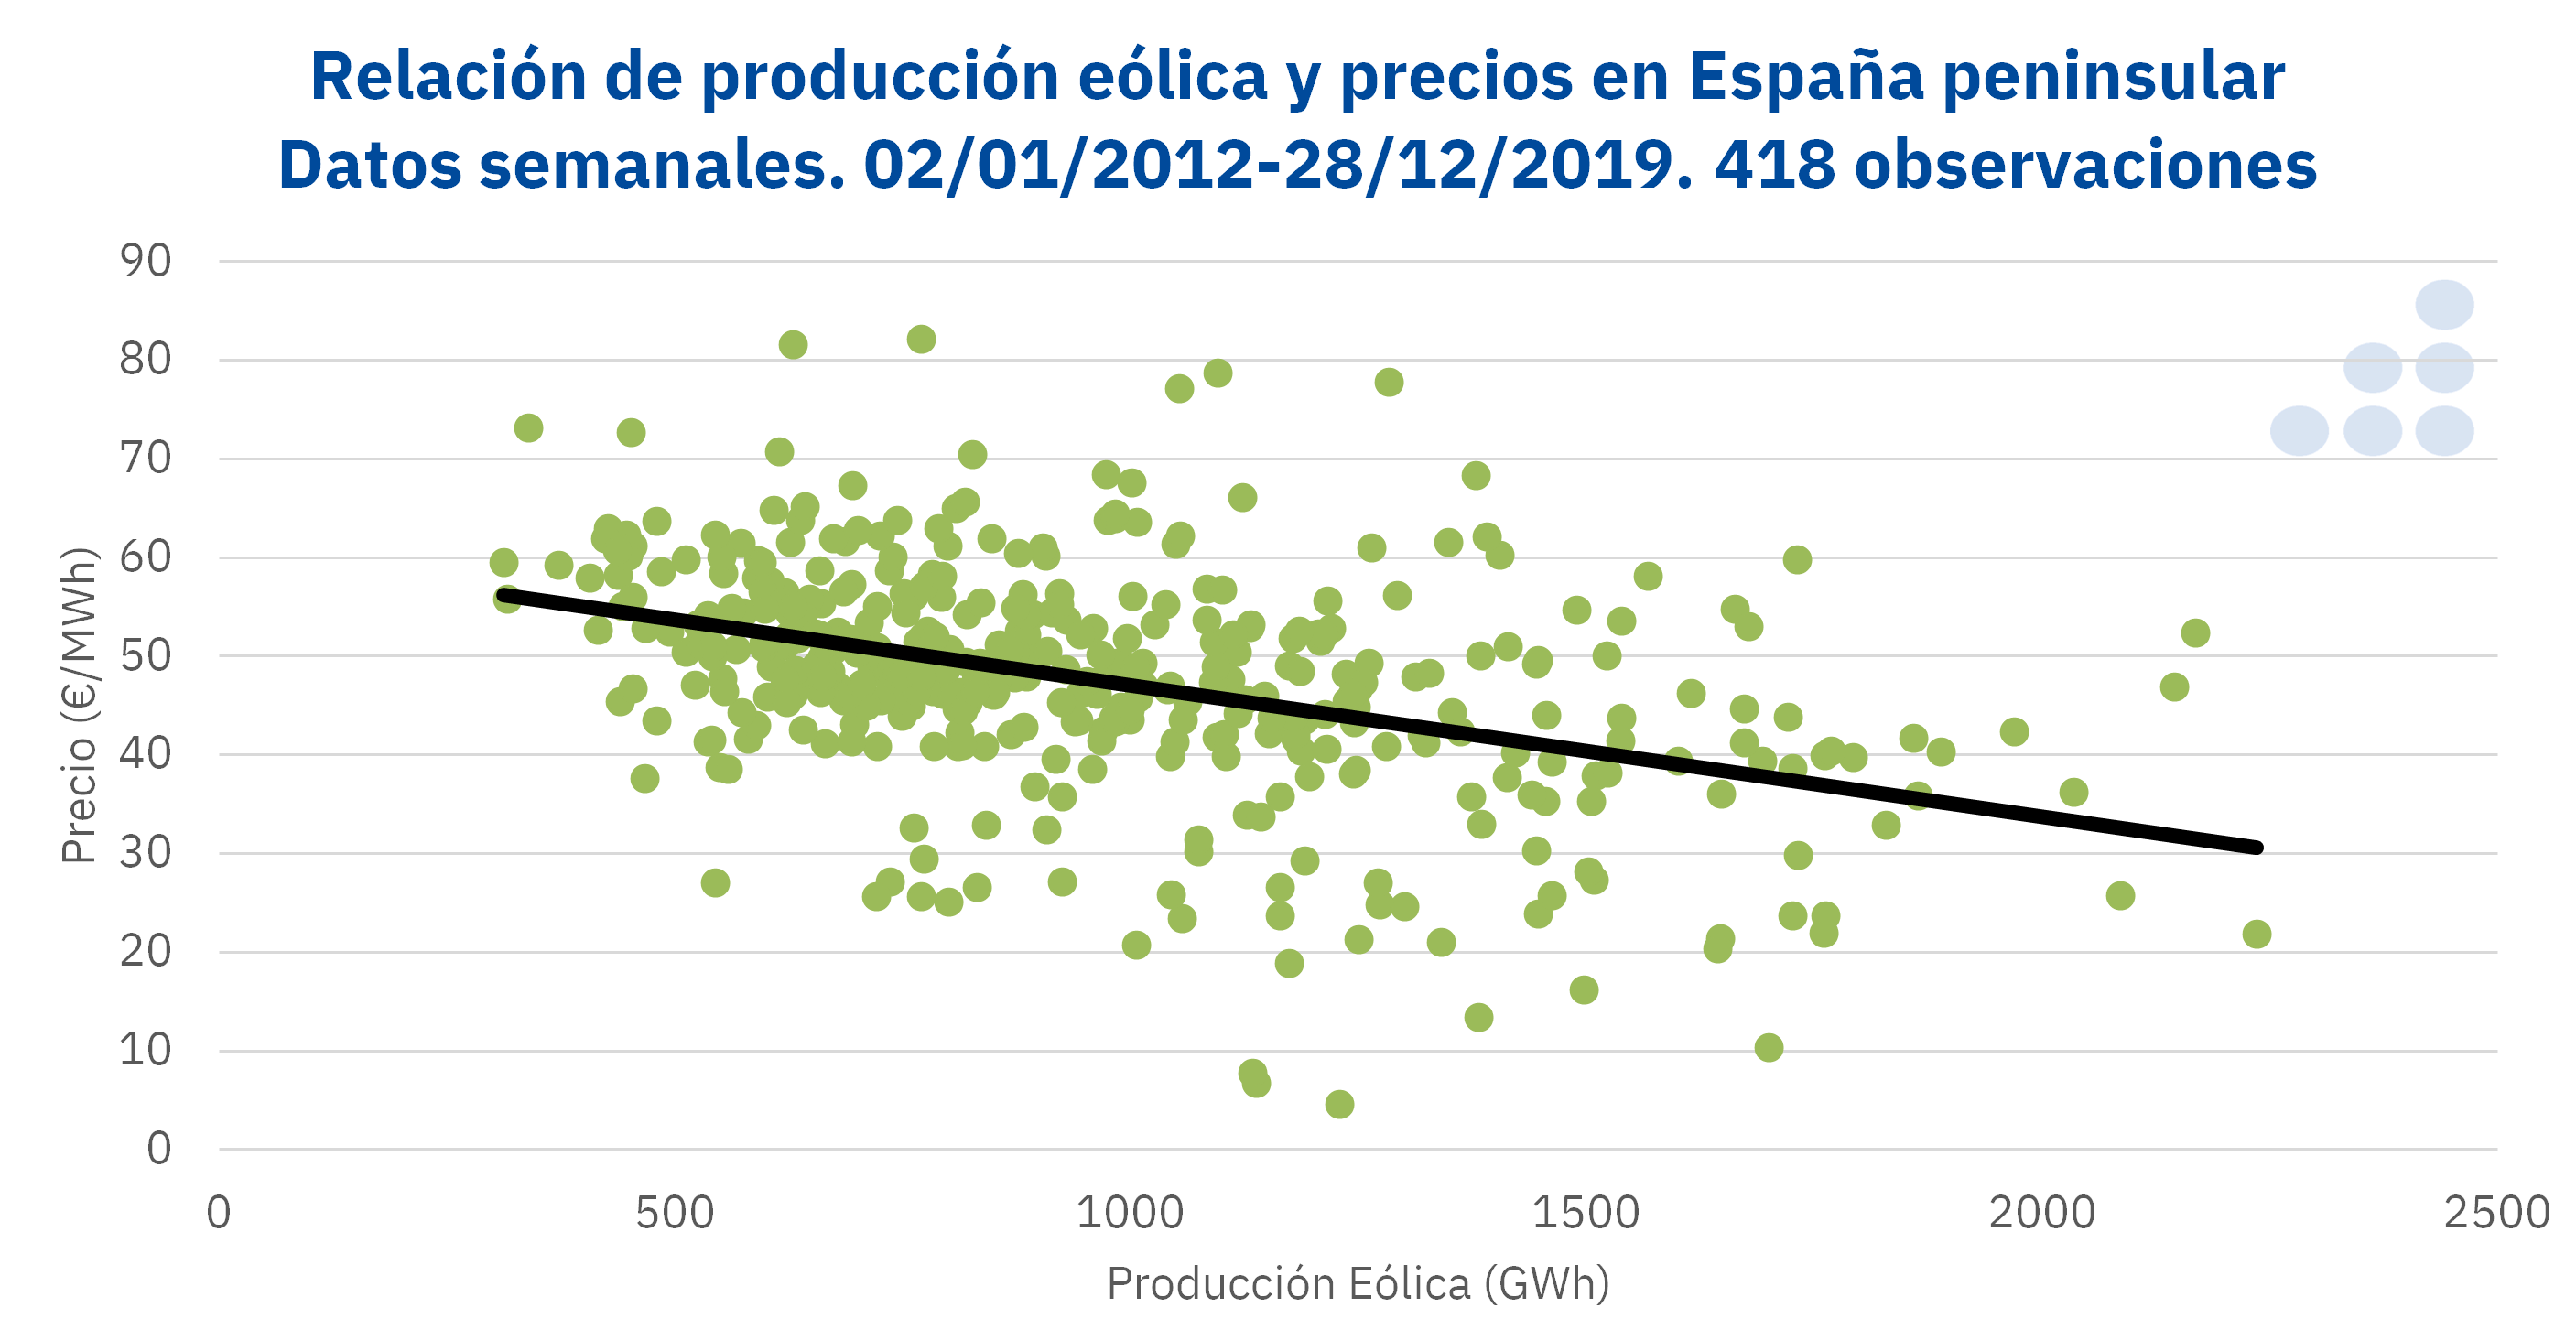 AleaSoft - Relacion produccion eolica precios espanna peninsular semanal 2019